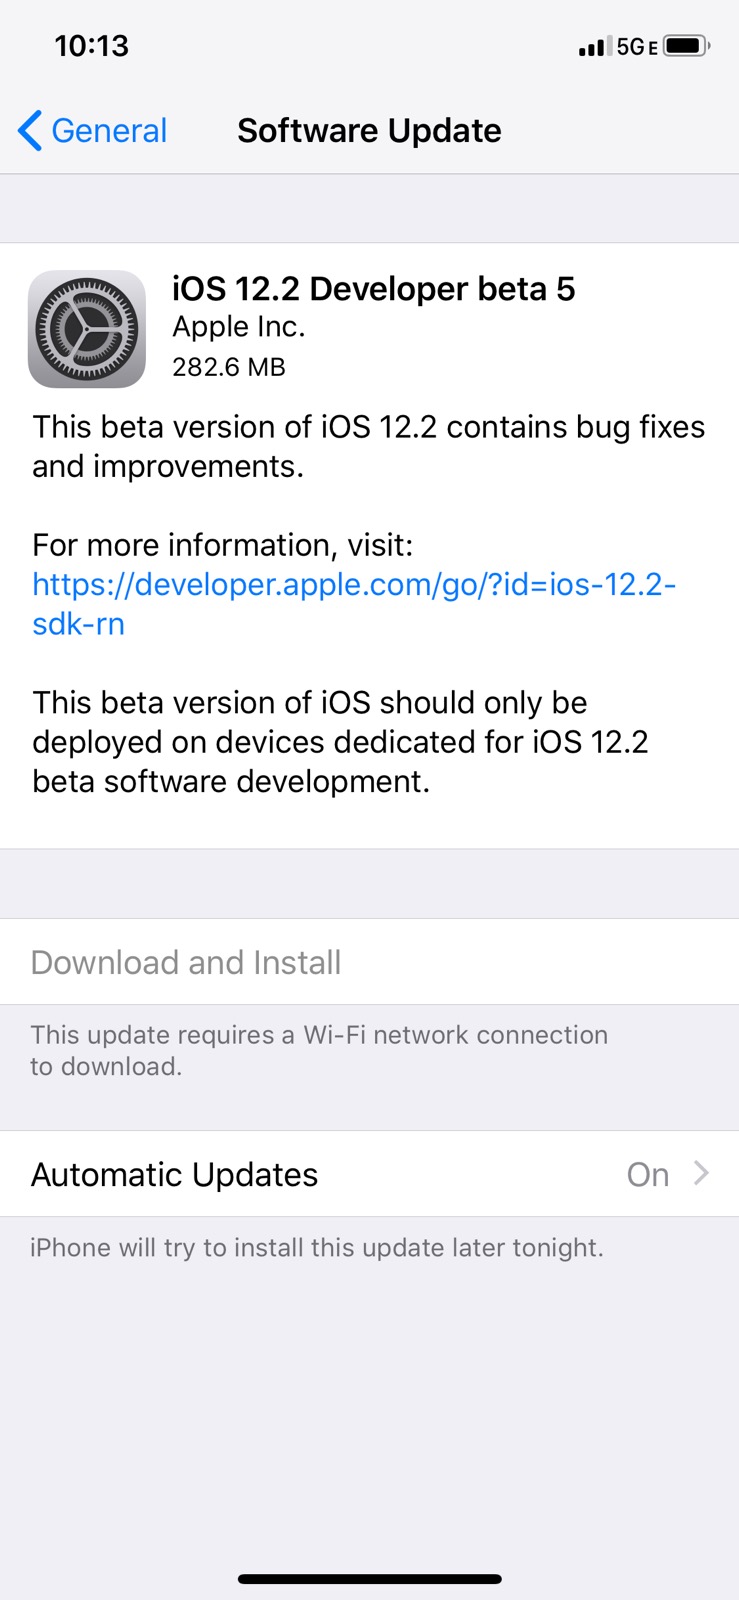 Apple Releases iOS 12.2 Beta 5 [Download]